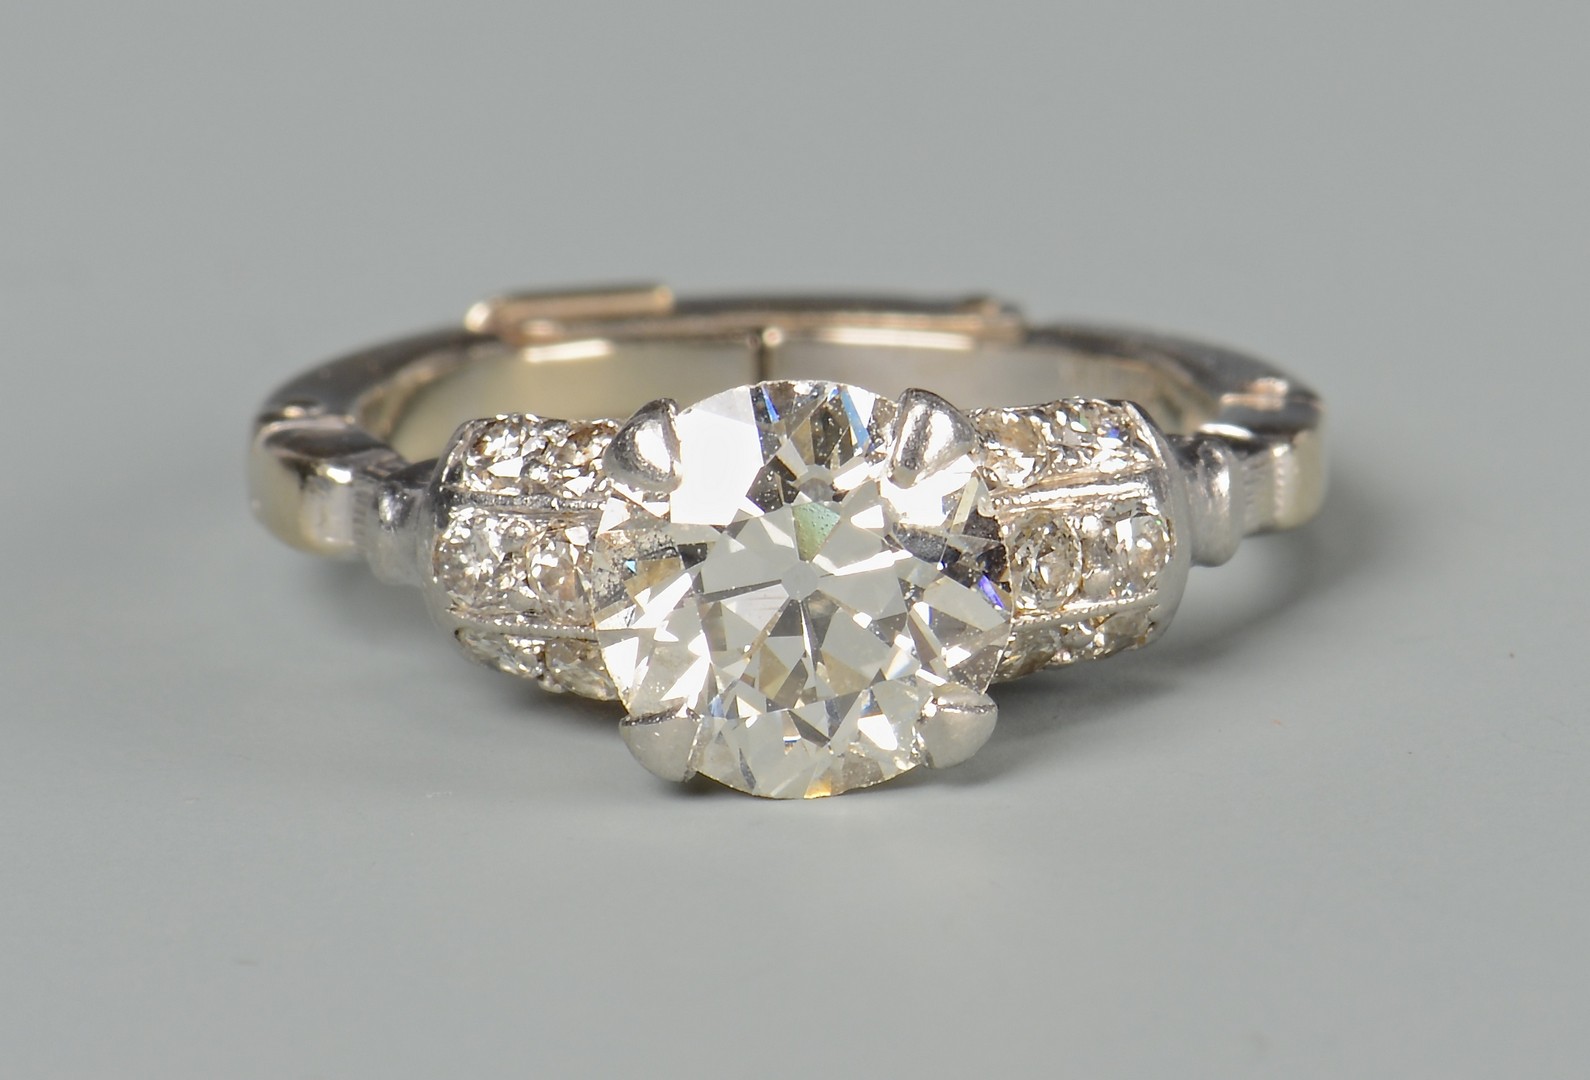 Lot 397: 1.35 carat old mine cut diamond ring